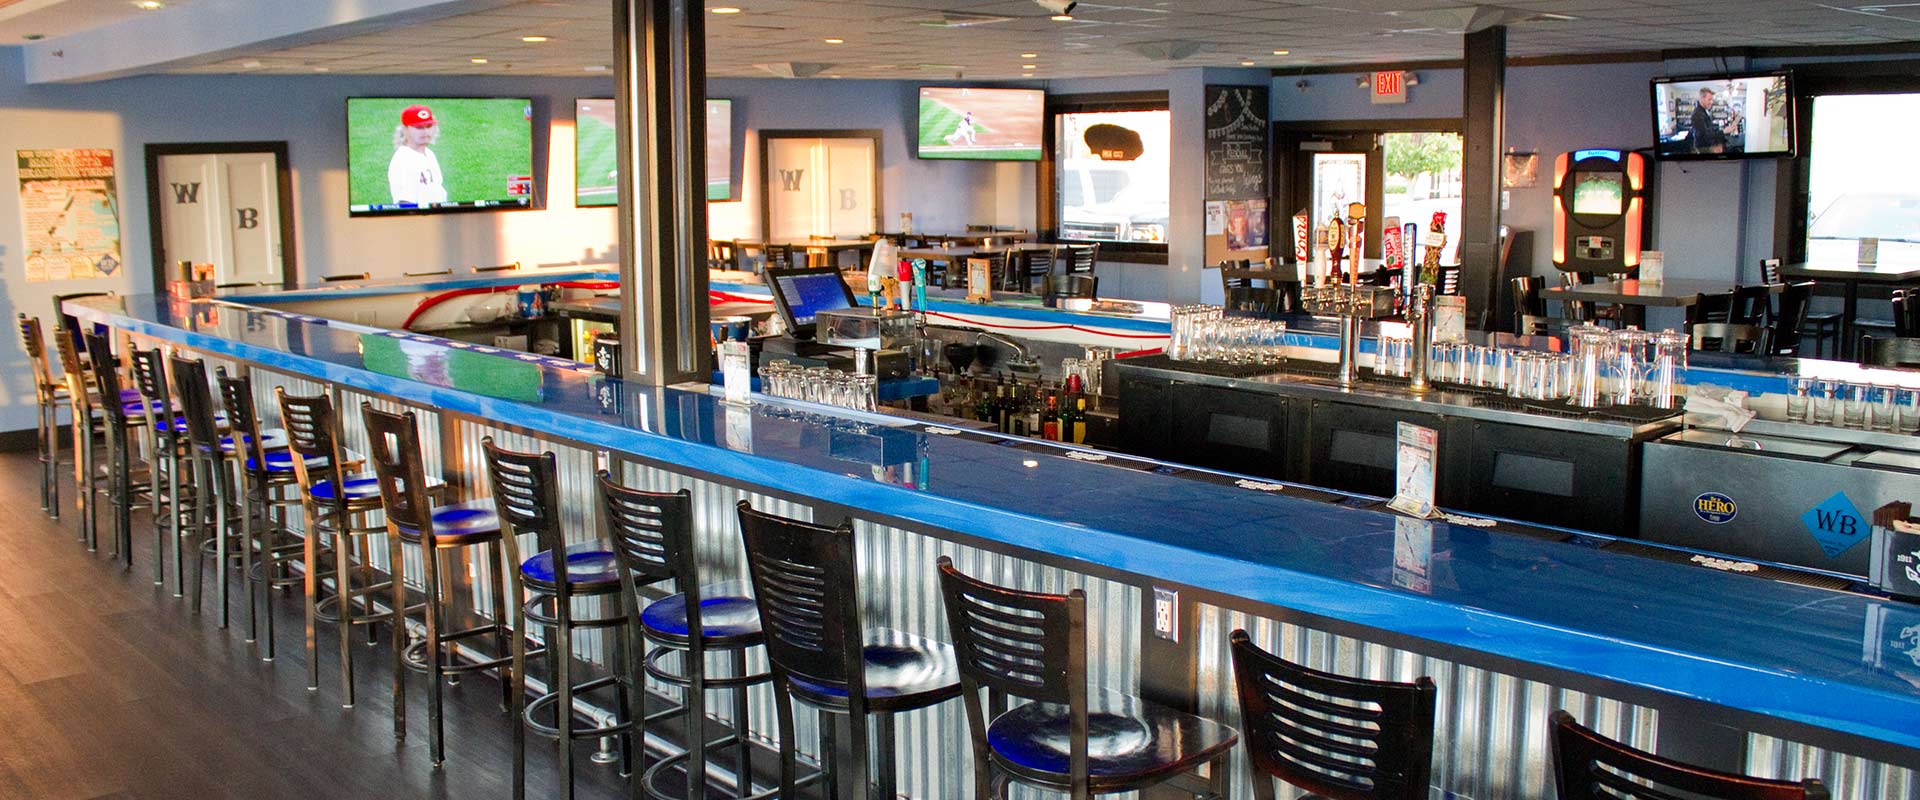 Restaurant, Bar & Grill, Happy Hour Drink Specials: Atlantic City, NJ: Wonder  Bar